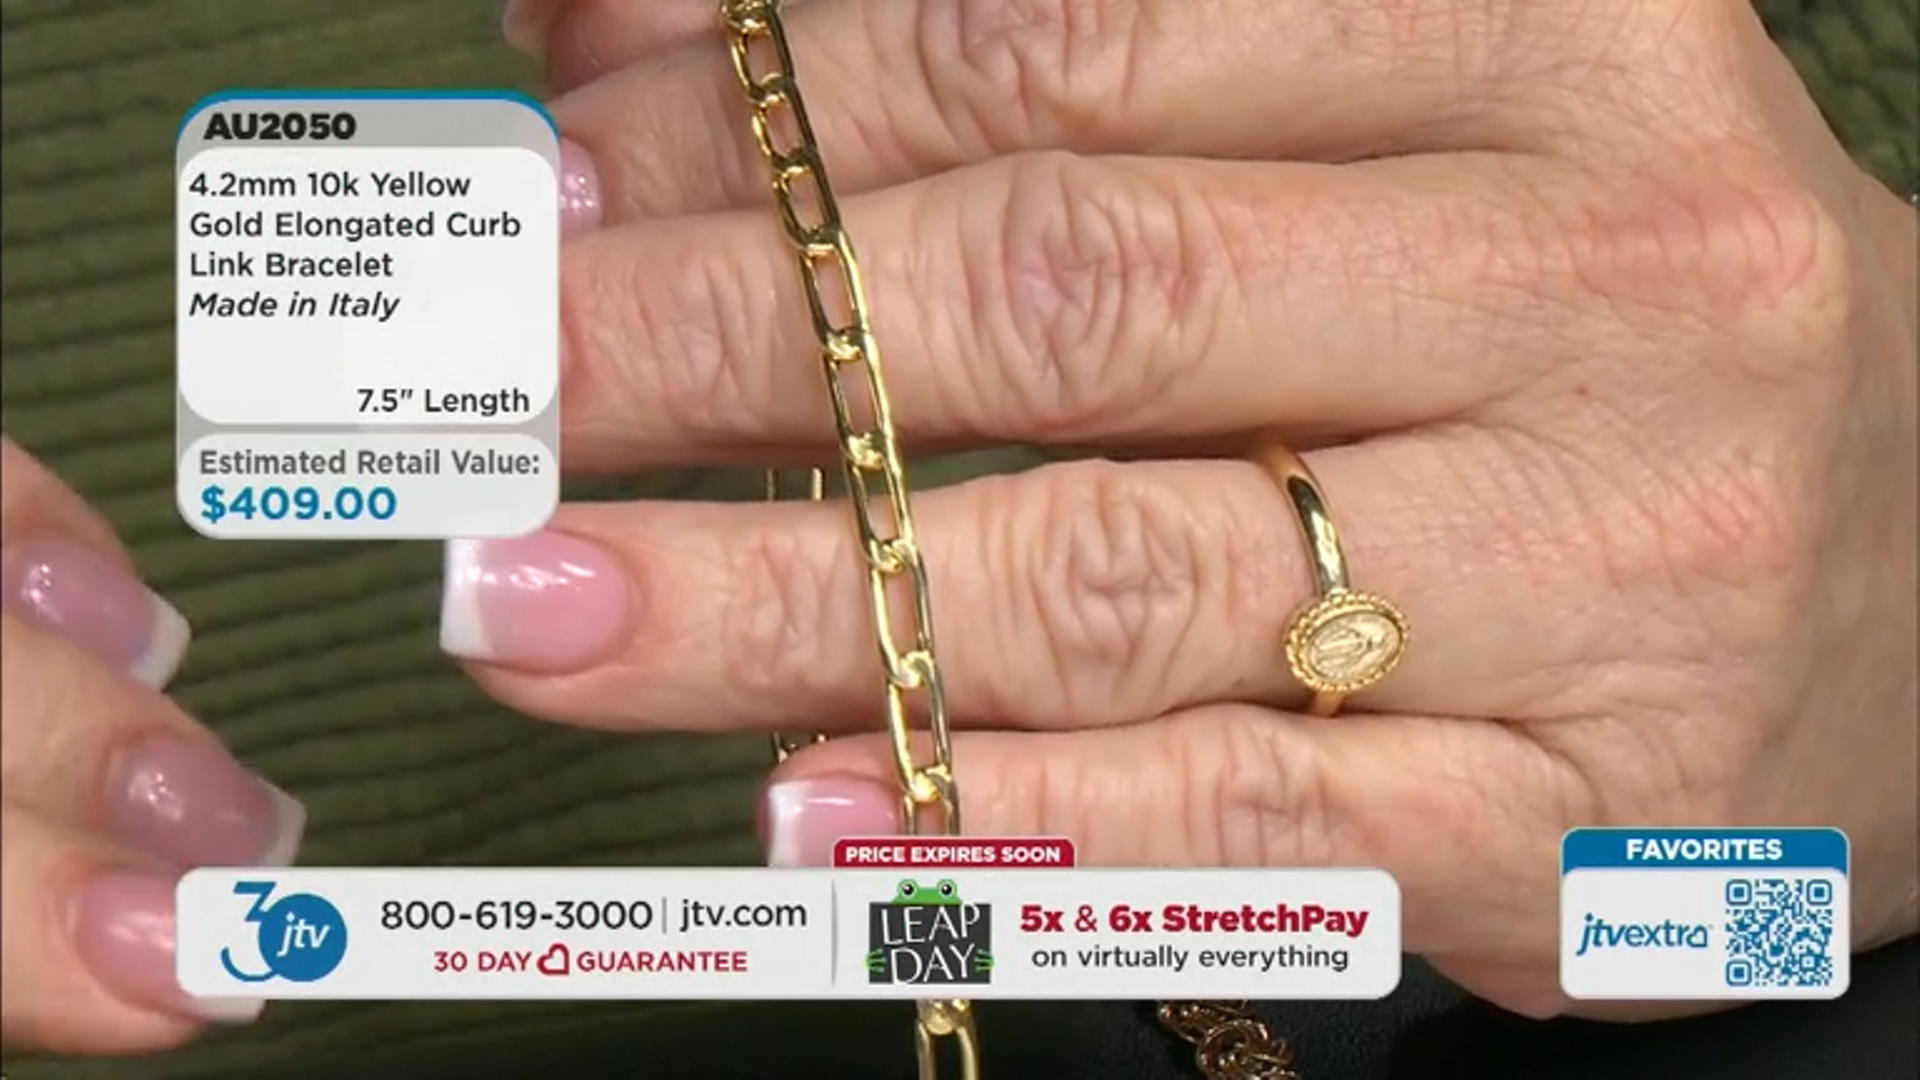 10k Yellow Gold 4.2mm Elongated Curb Link Bracelet Video Thumbnail